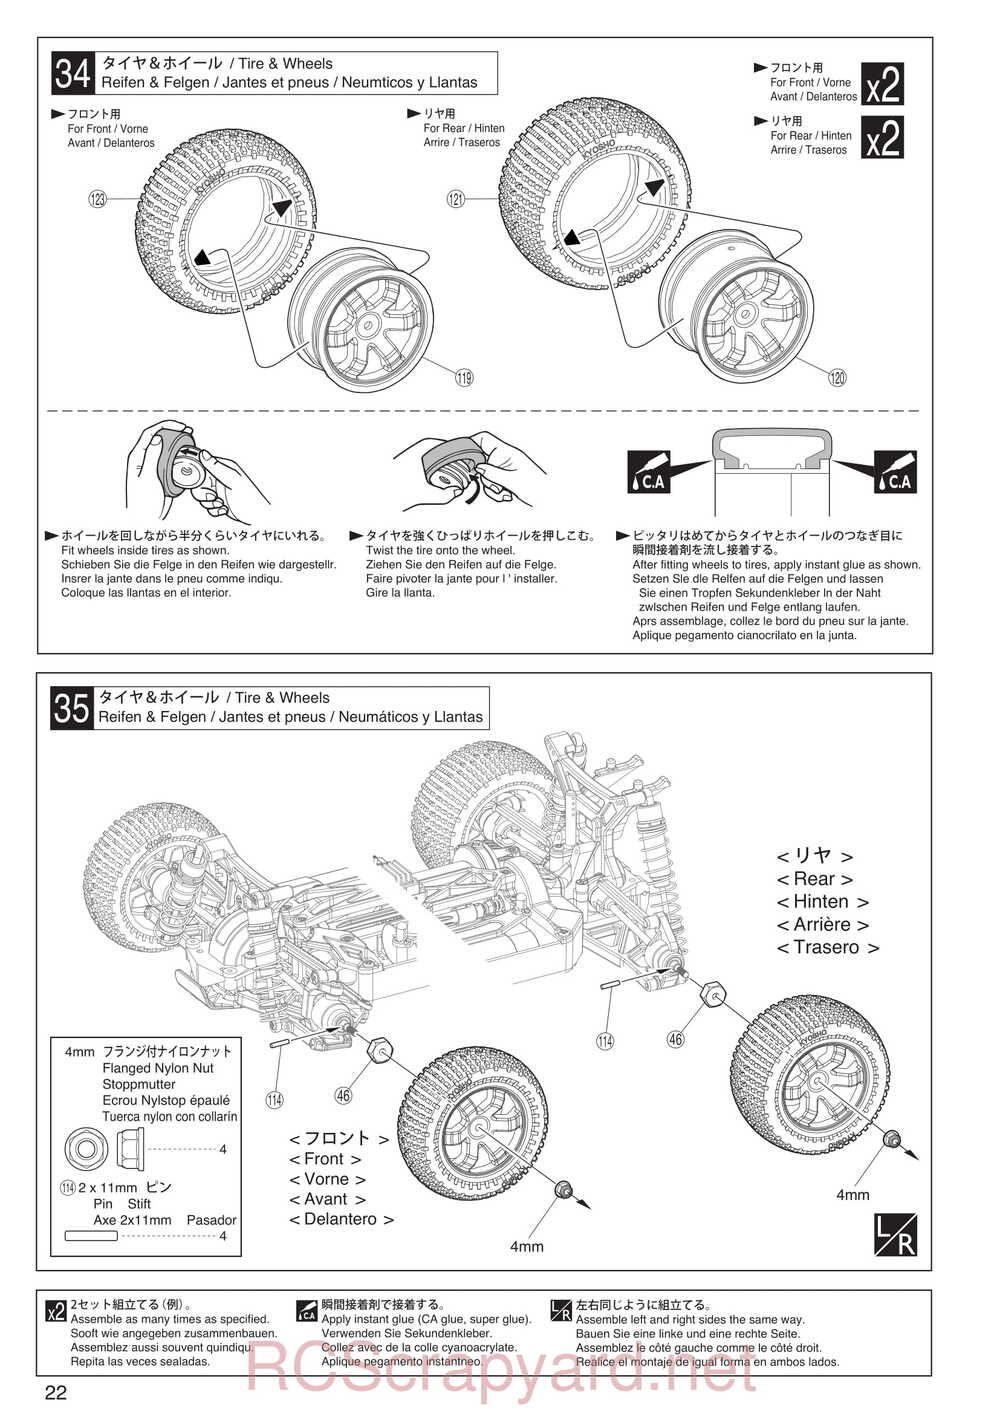 Kyosho - 30930T1 - EP Fazer KOBRA - Manual - Page 22